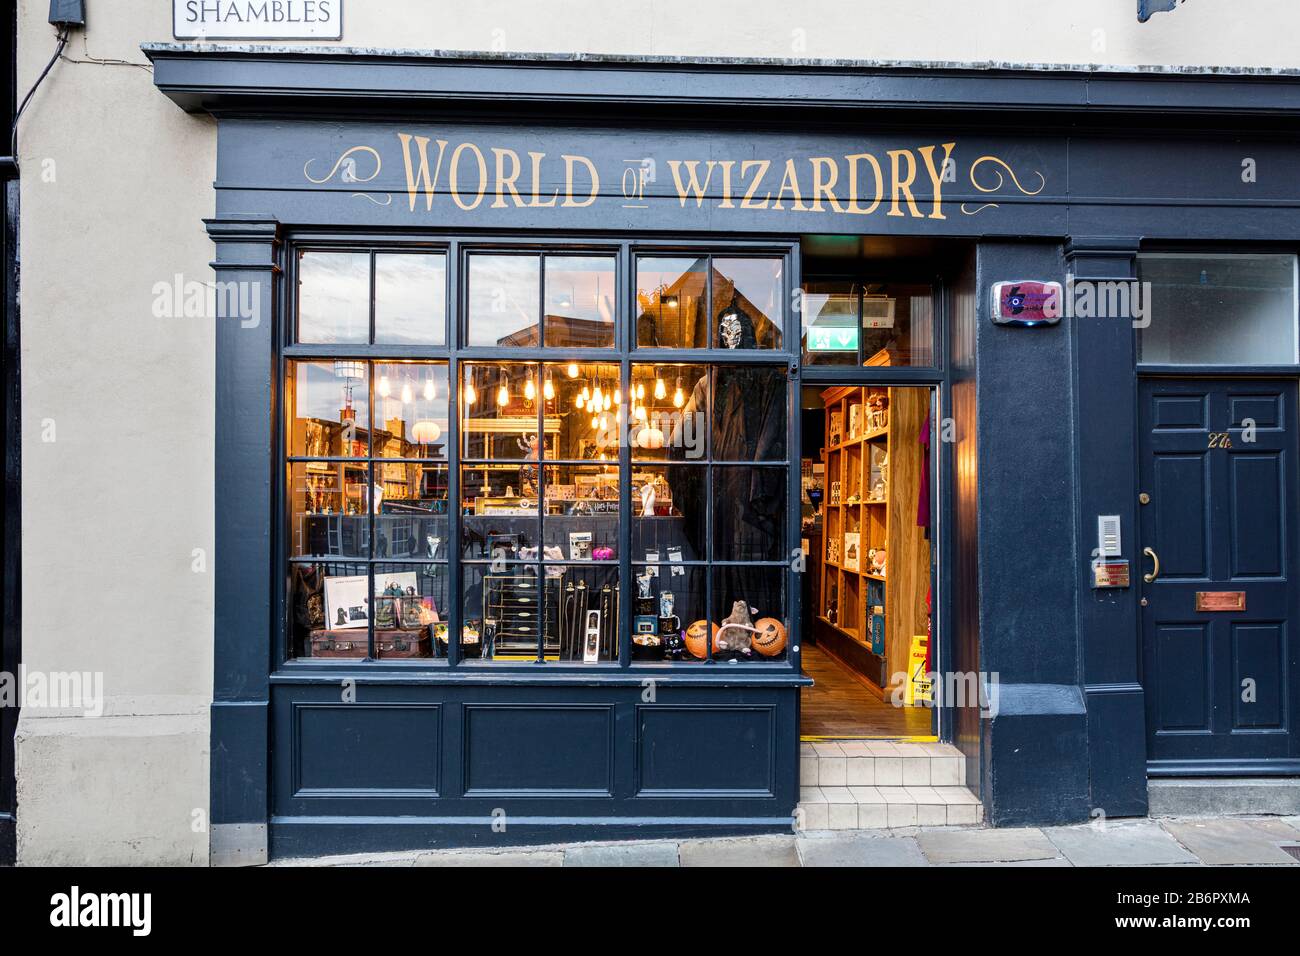 World of Wizardry - Harry Potter inspired shop along Market Street in the Shambles, York, Yorkshire, England, UK Stock Photo